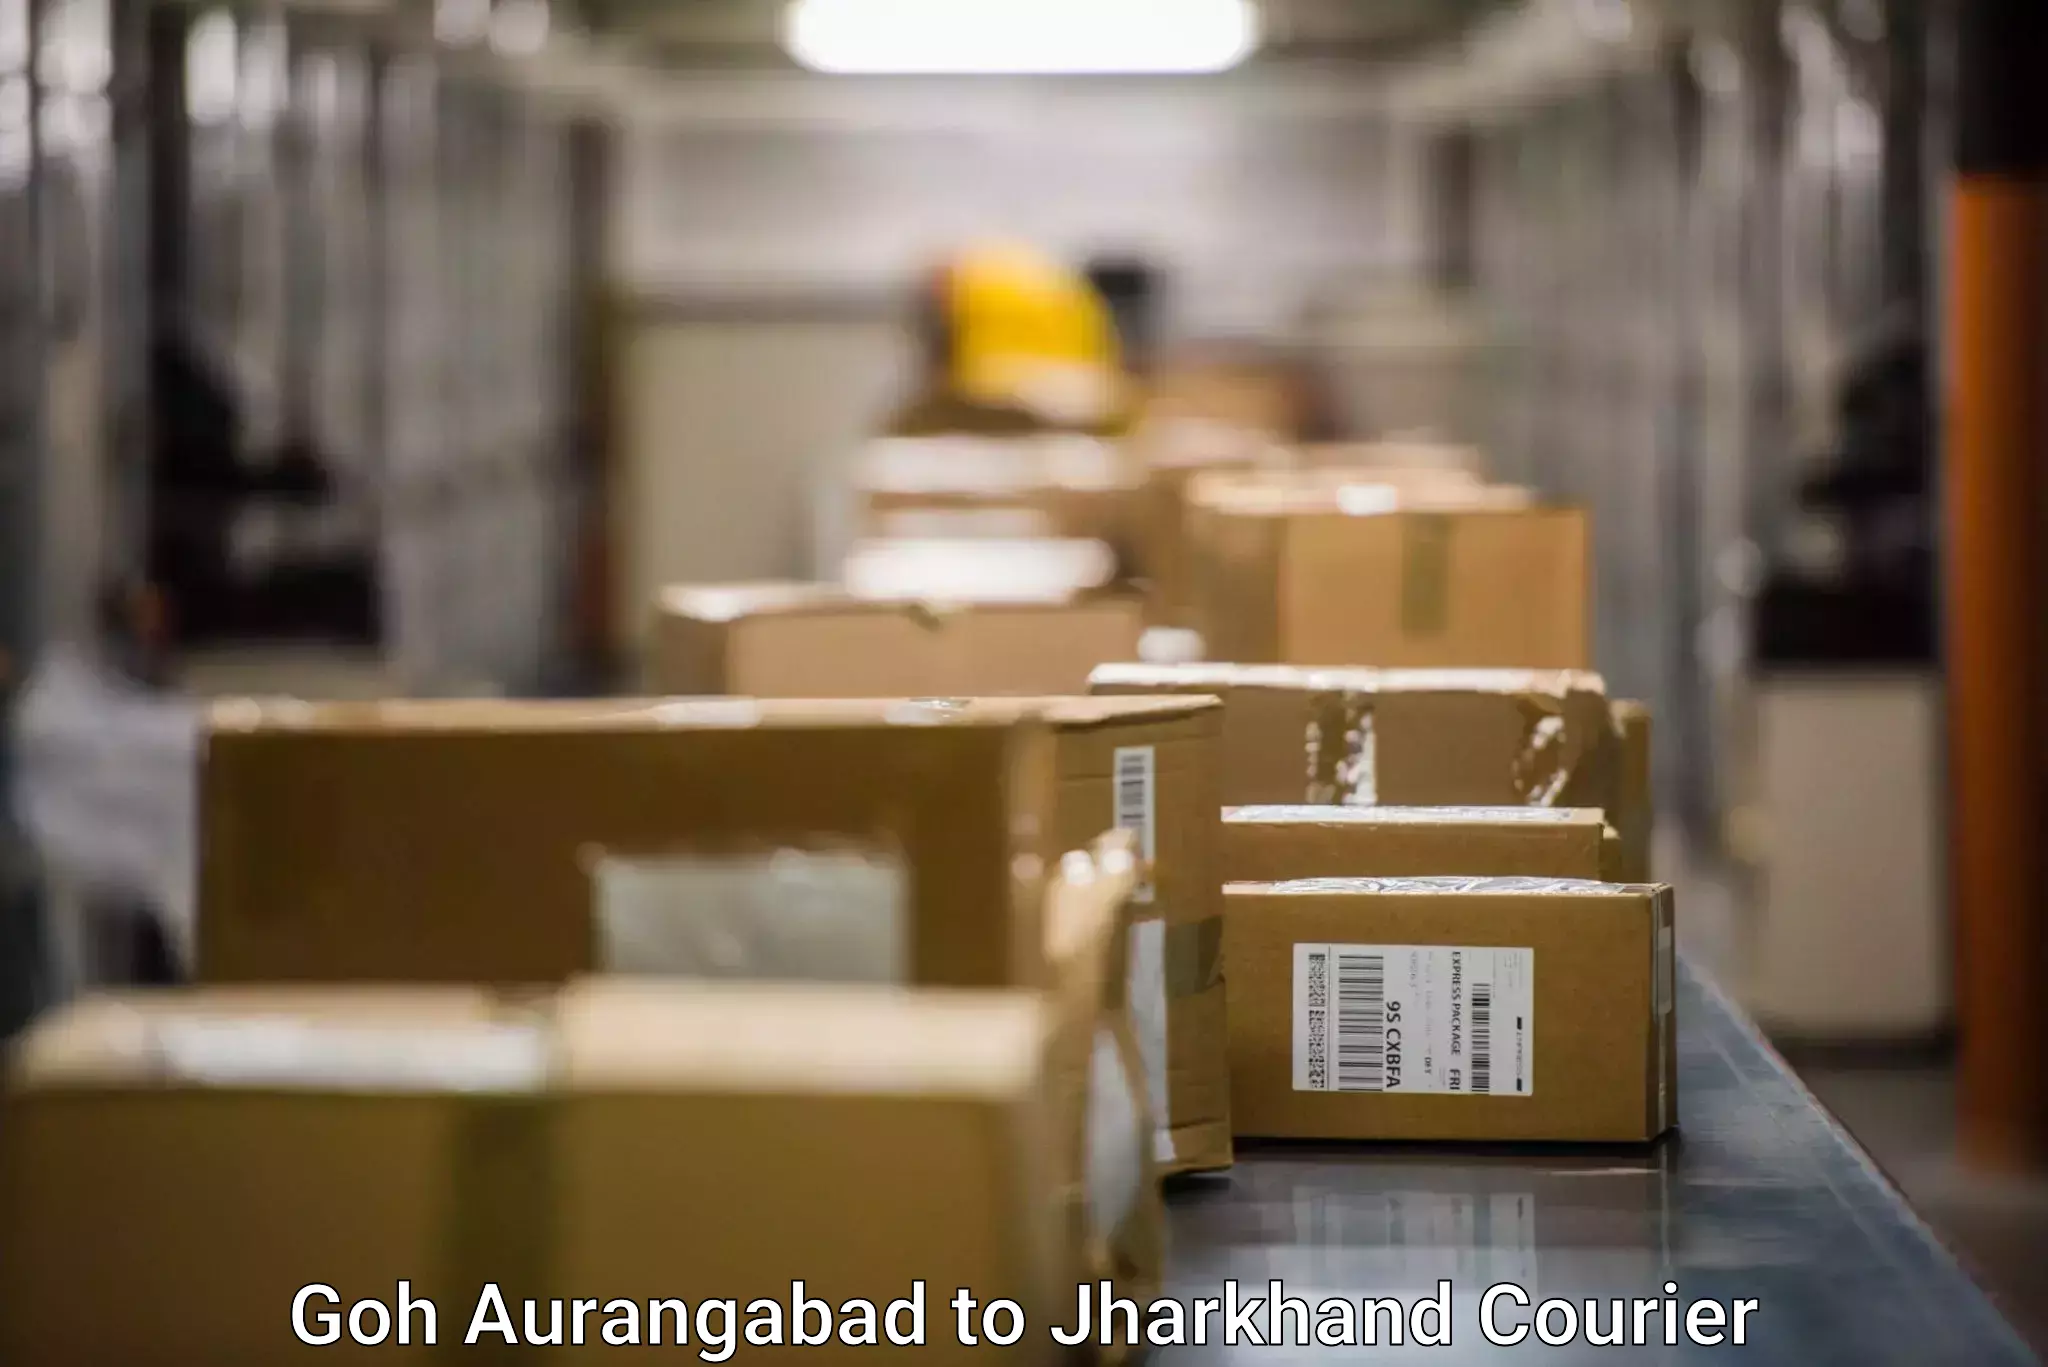 High-speed parcel service Goh Aurangabad to Jharkhand